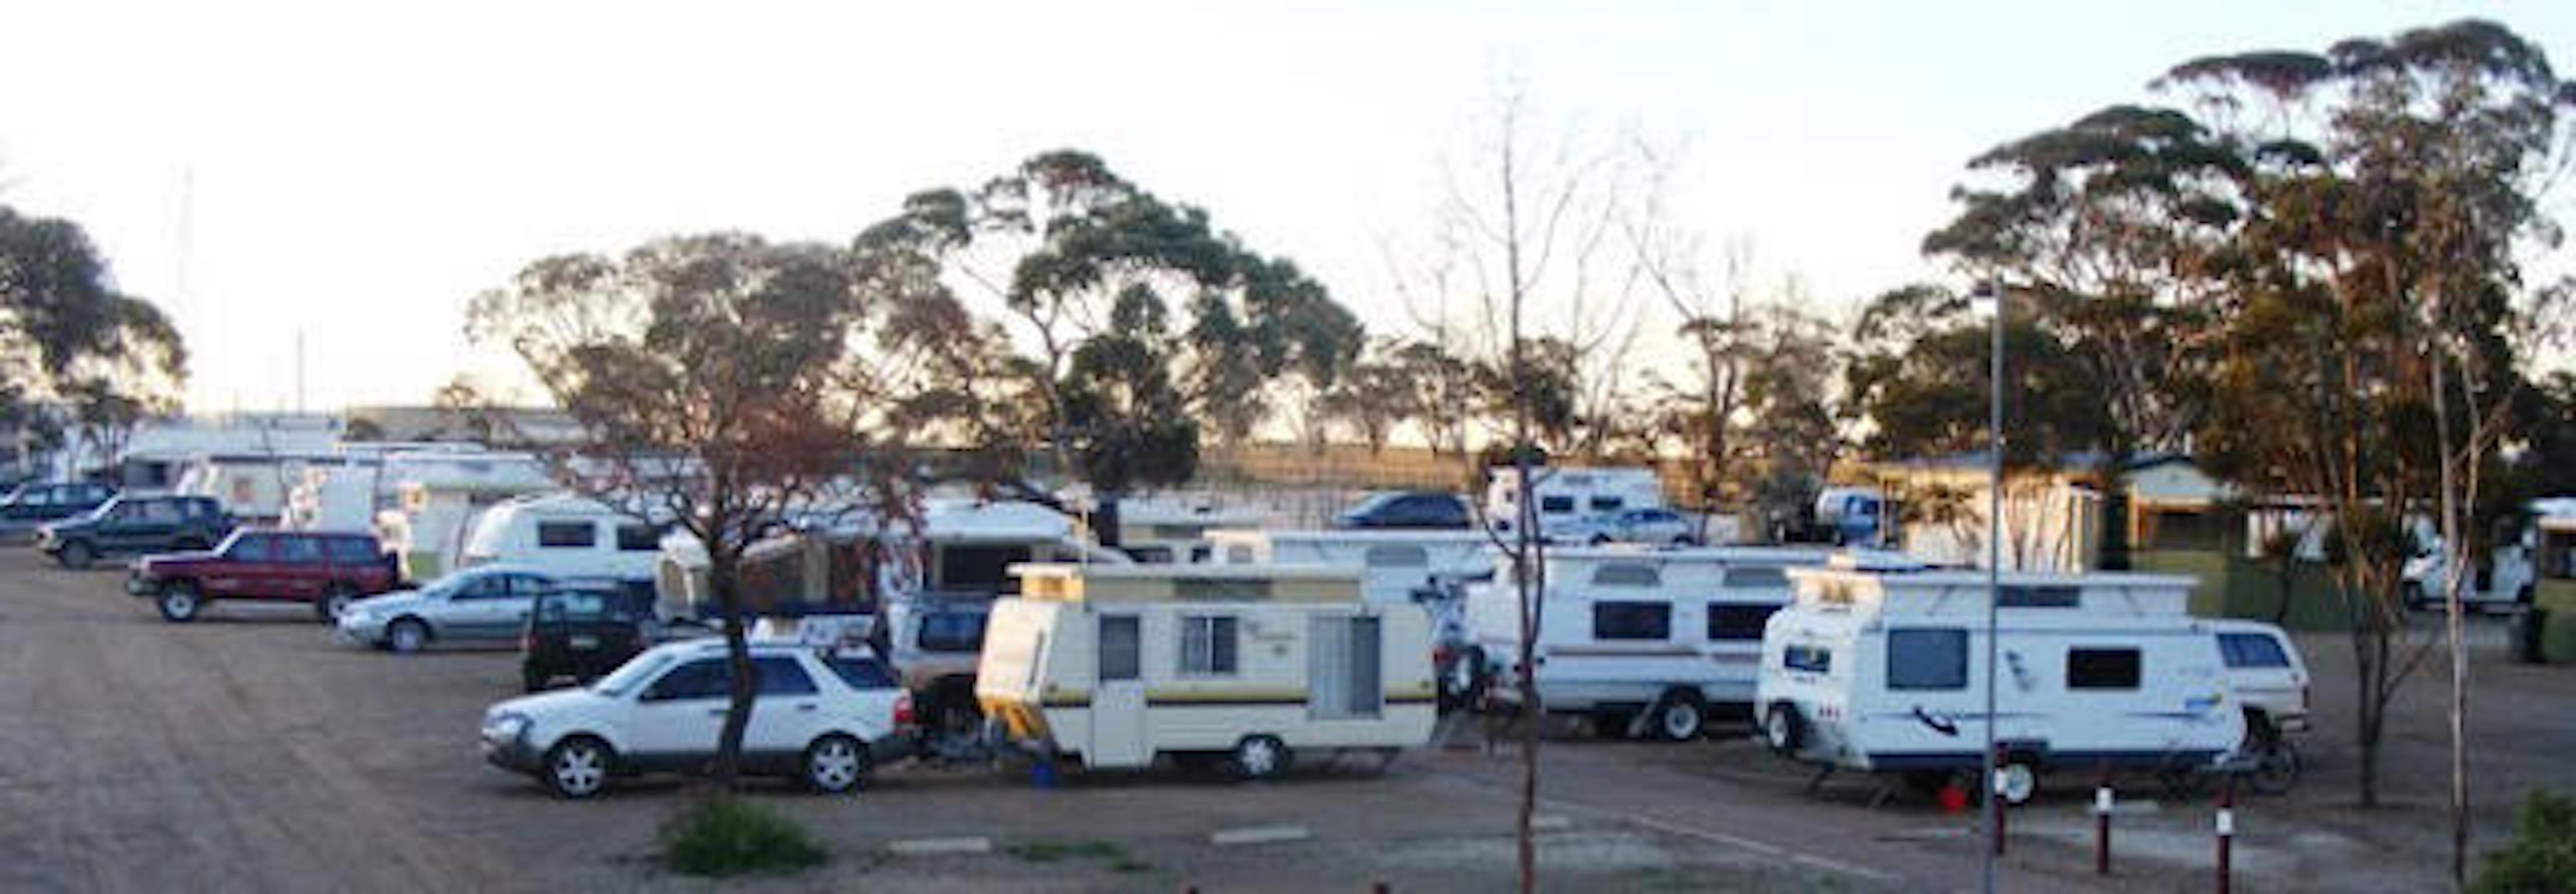 Woomera Traveller's Village and Caravan Park - Dalby Accommodation